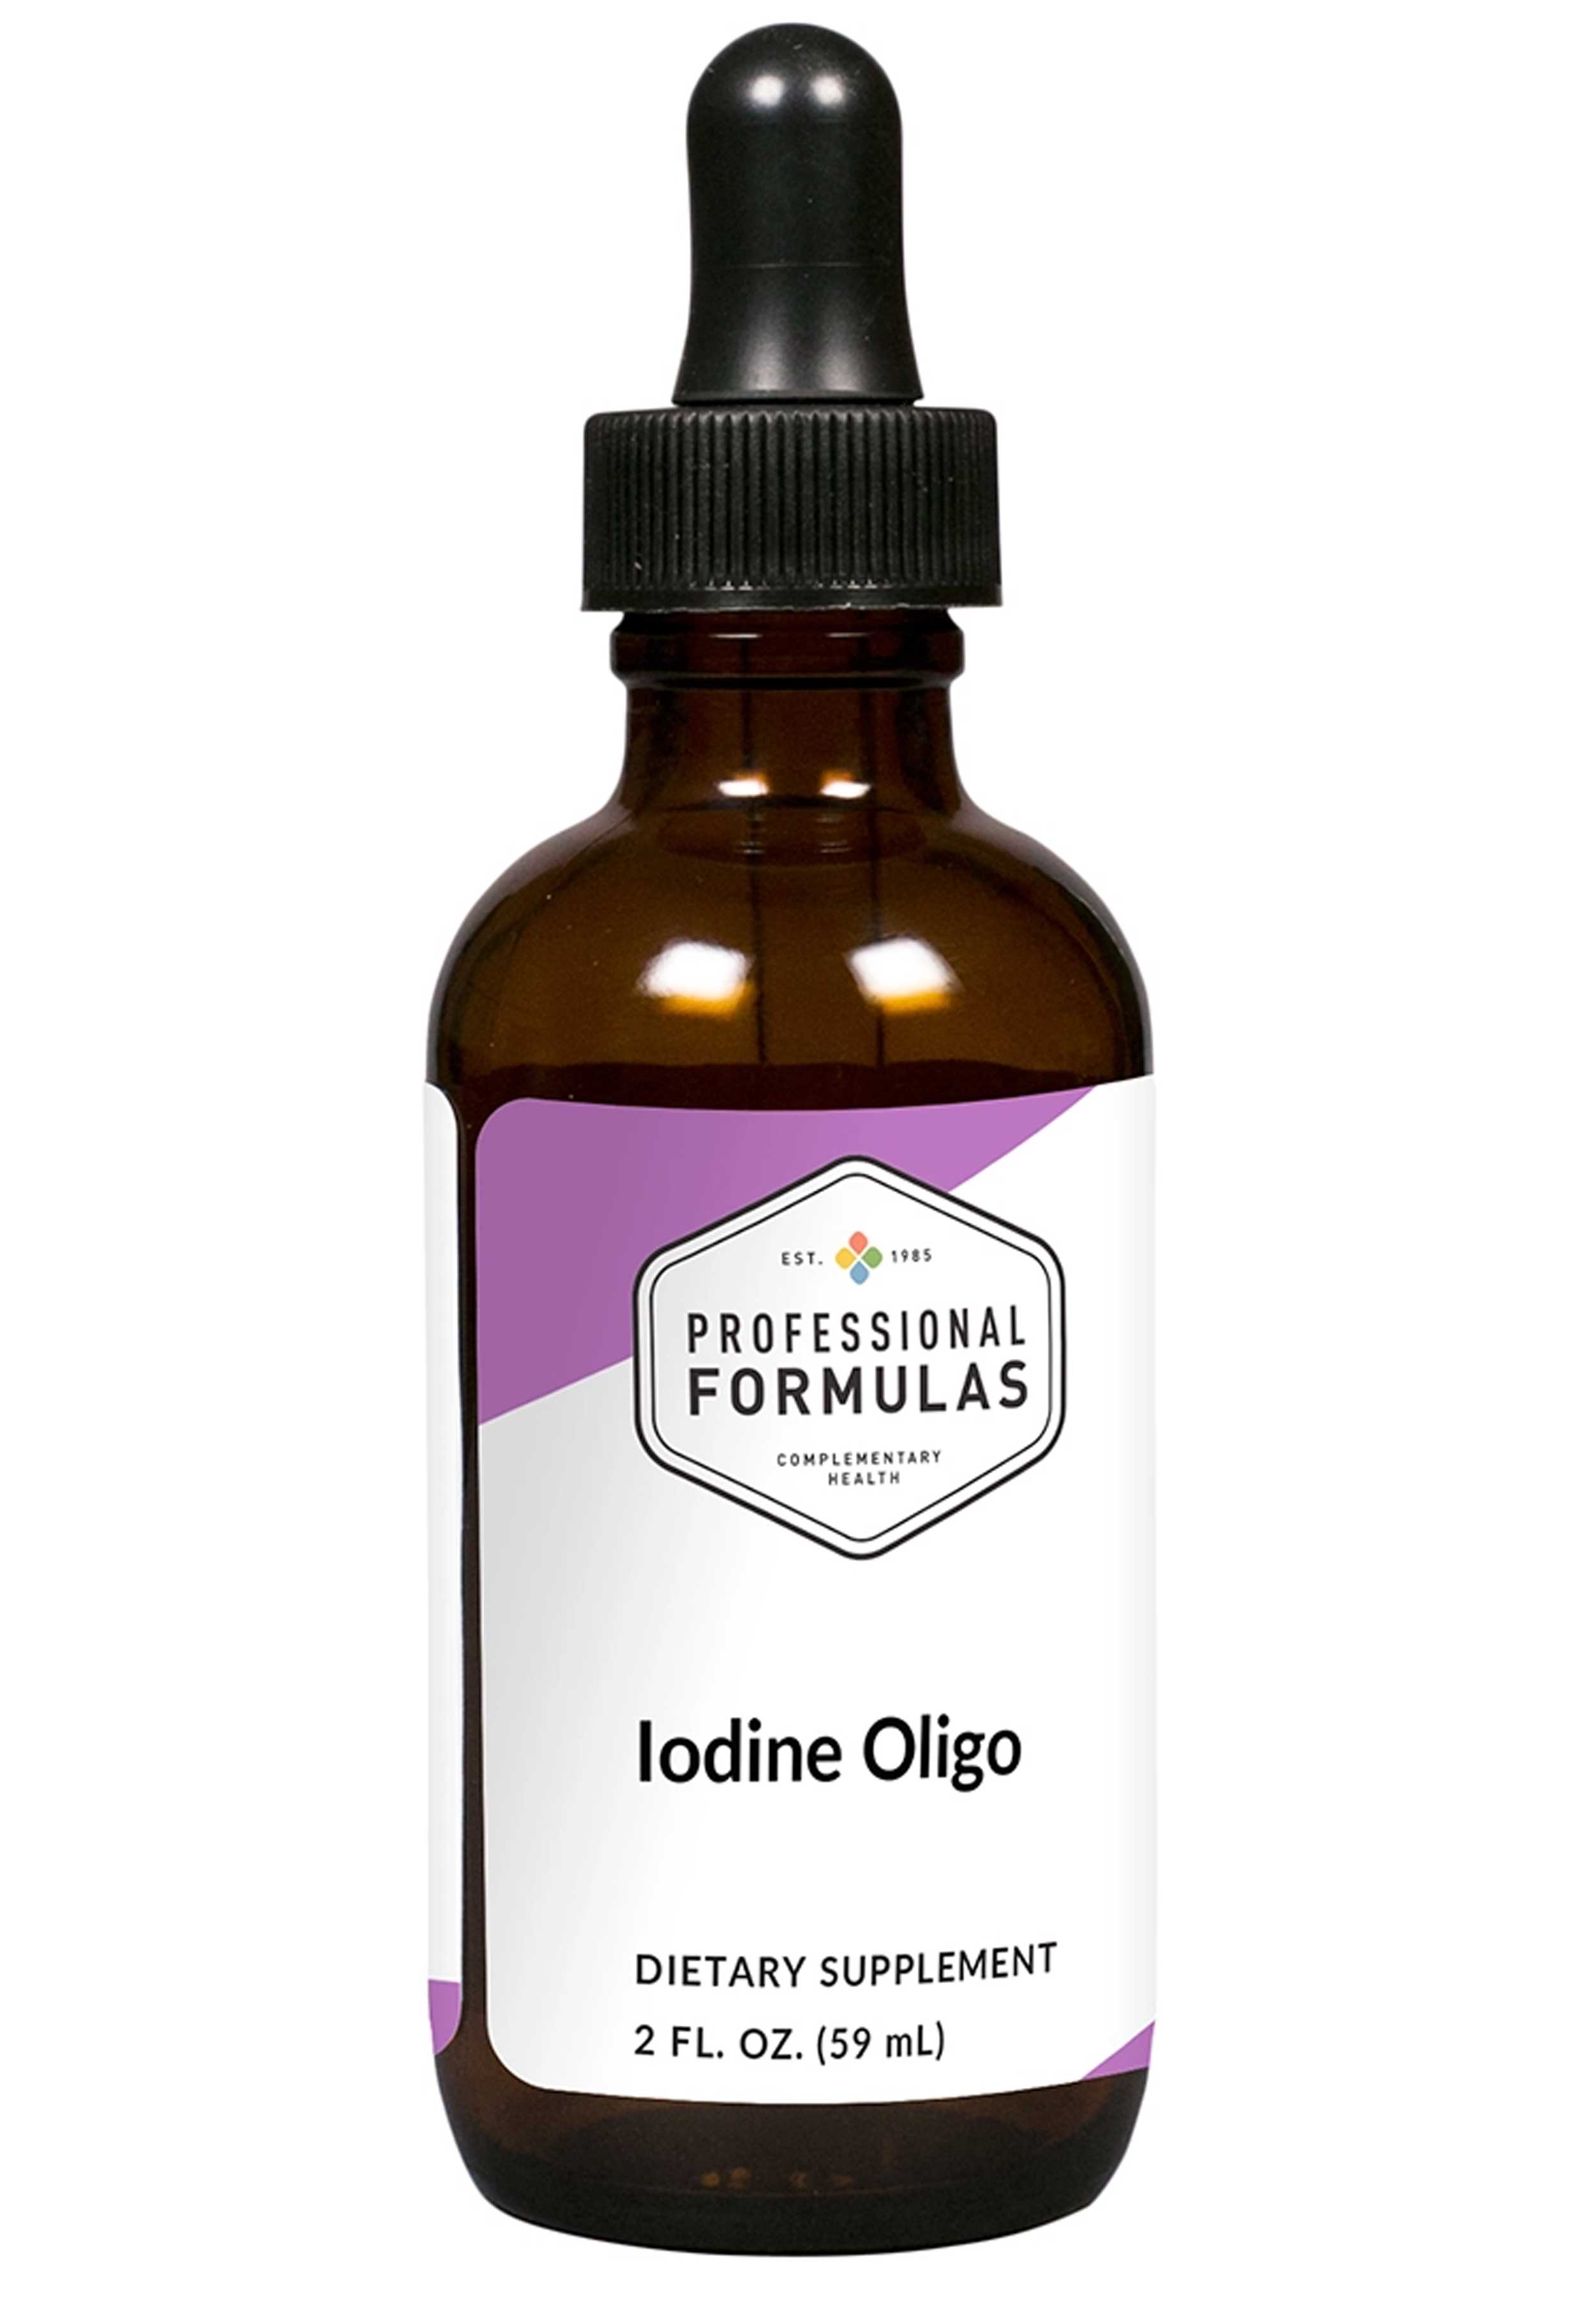 Professional Formulas I-Iodine (Oligo Element)